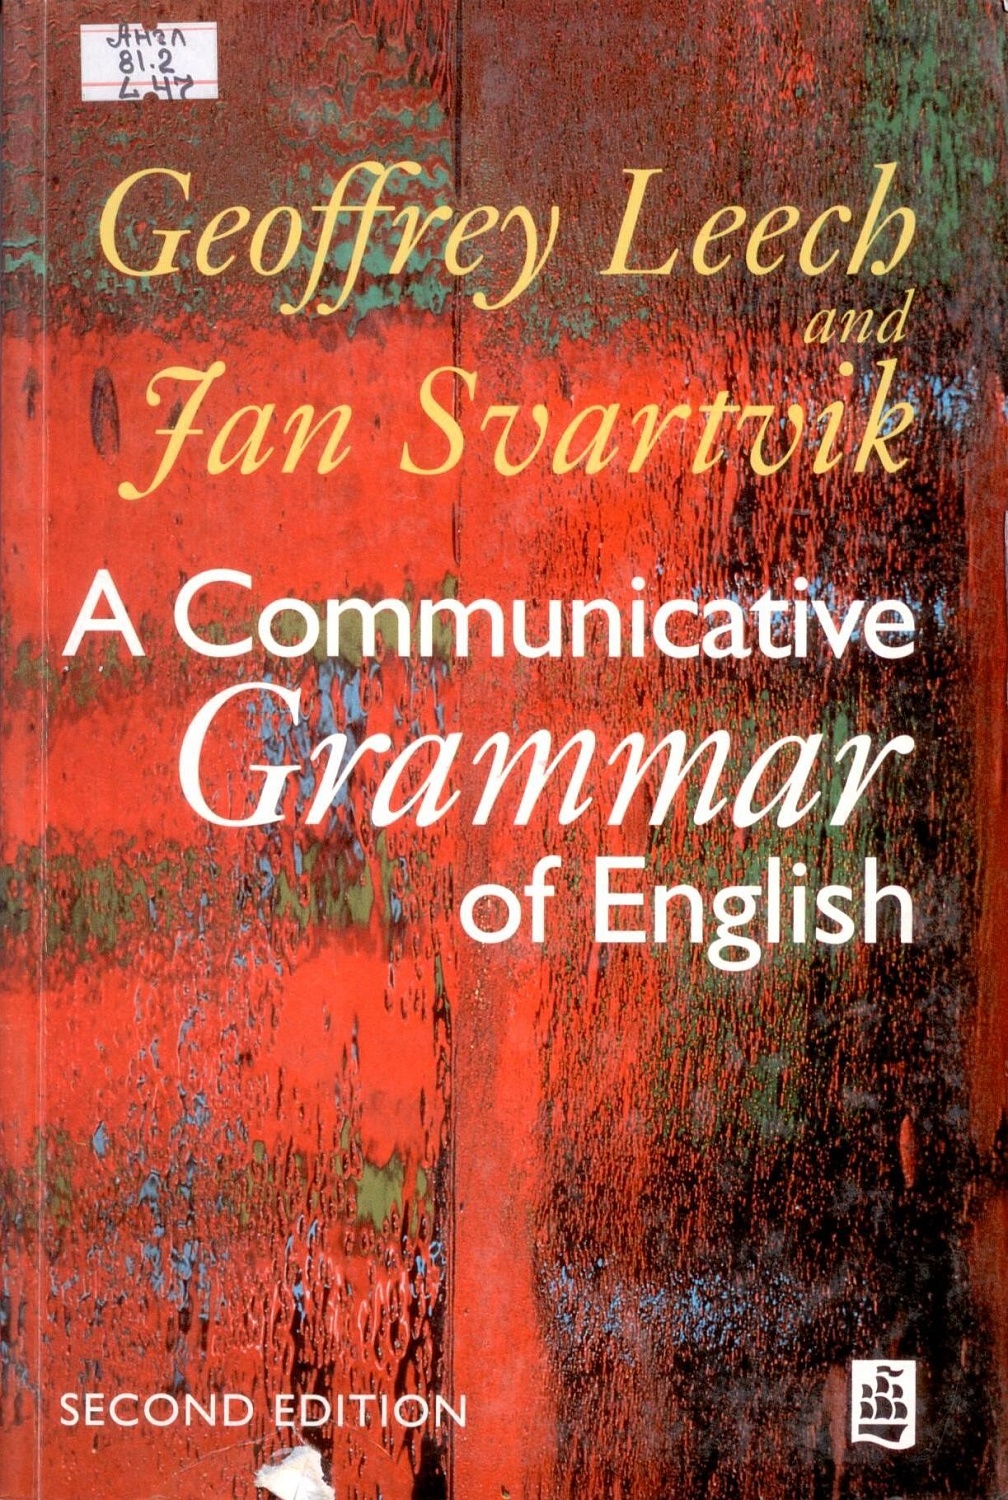 Англ 81.2 L 47 A Communicative Grammar of English / Geoffrey Leech and Jan Svartvik.- London: Longman, 1994.- 423 p.